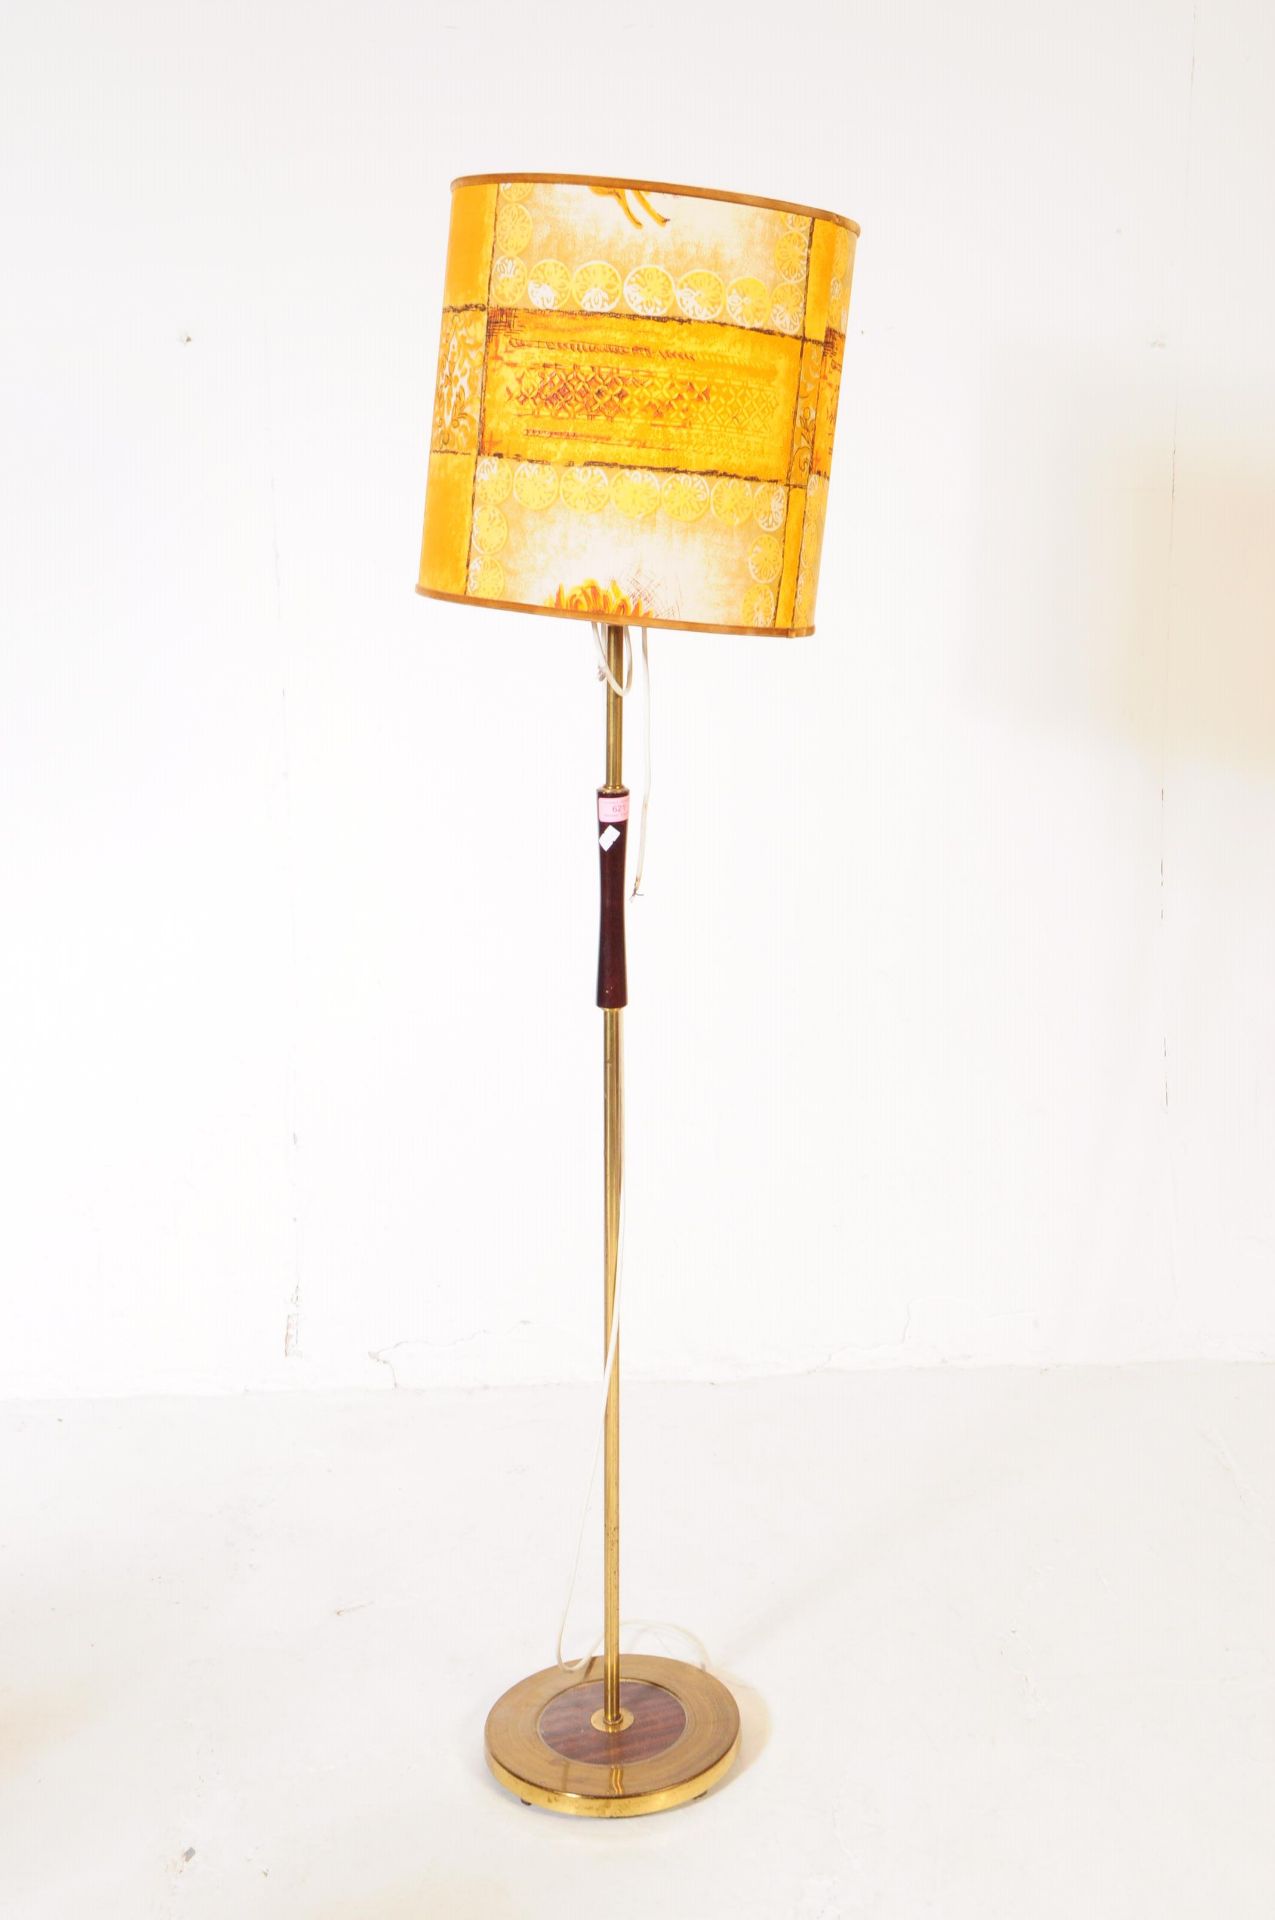 MID 20TH CENTURY DANISH MANNER STANDARD LAMP - Image 2 of 4